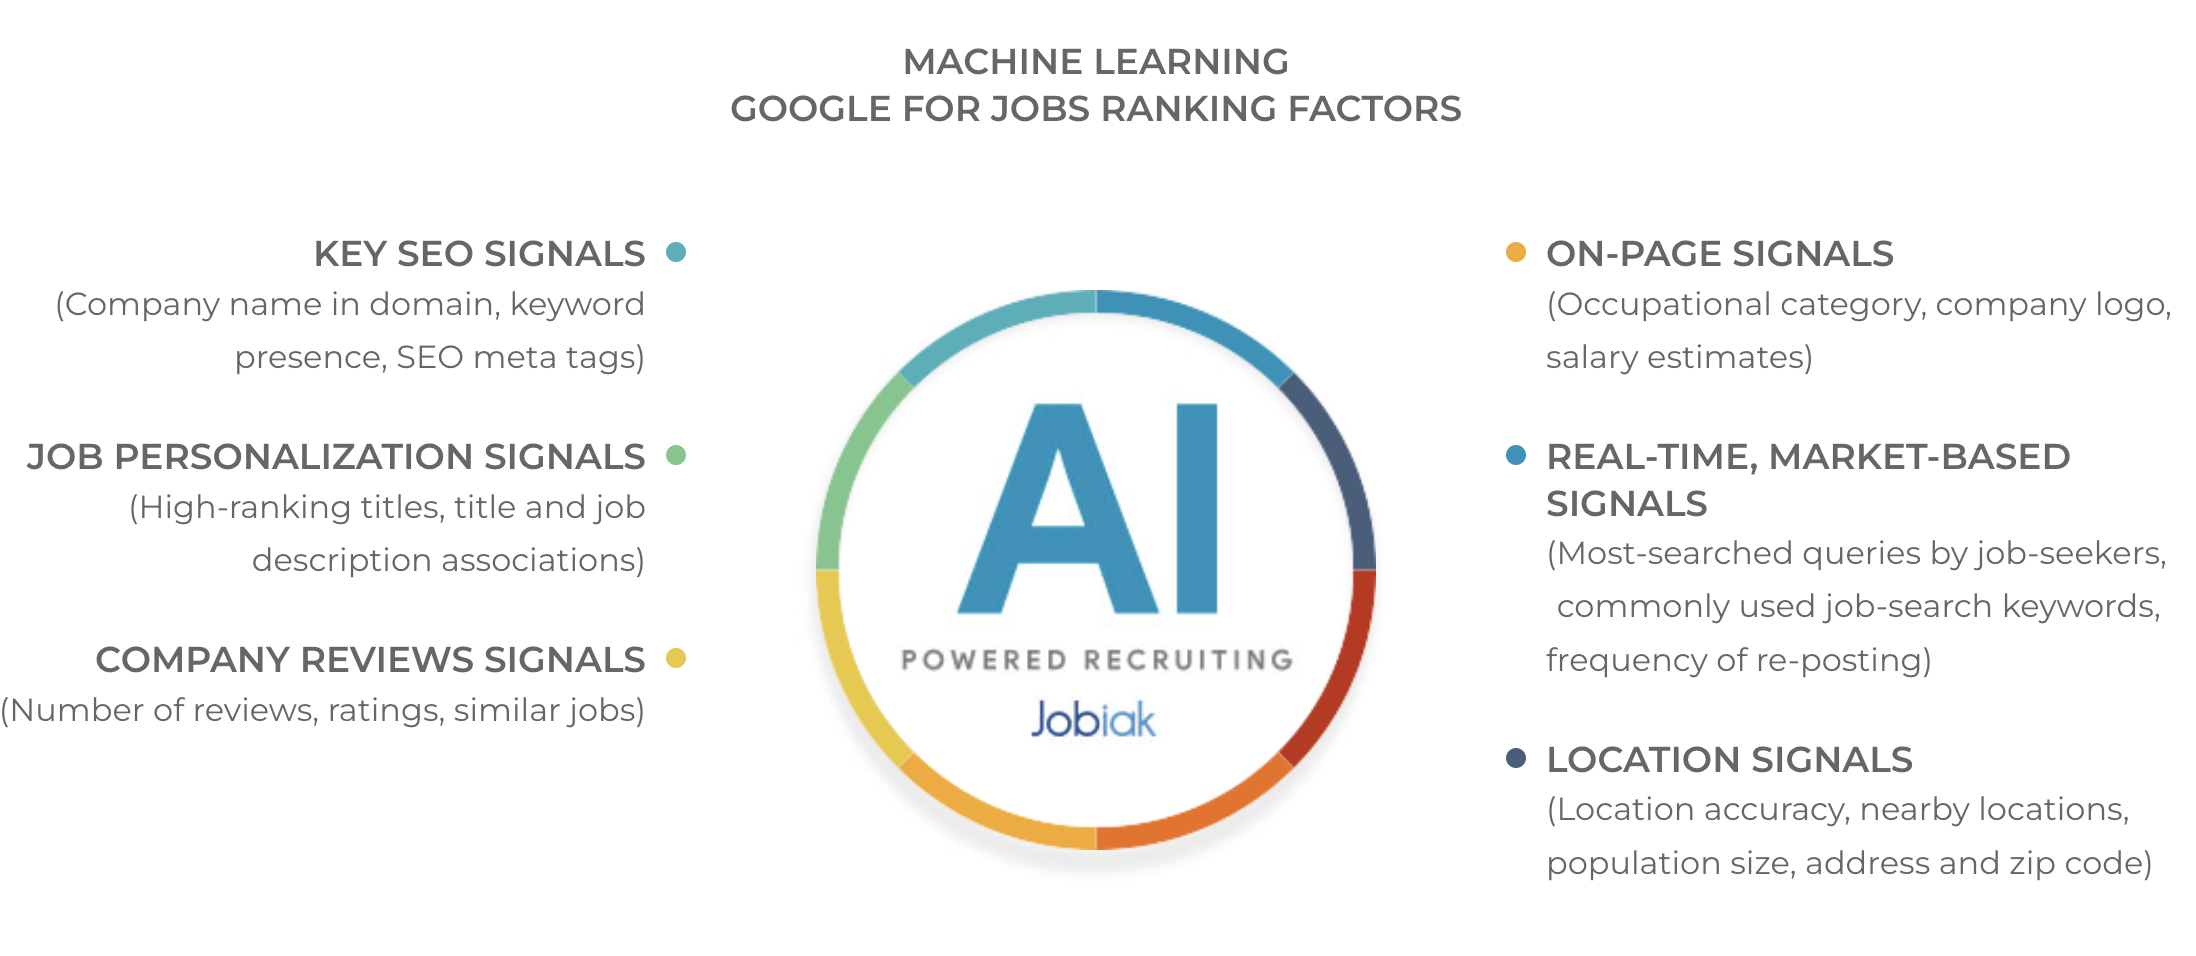 Google for Jobs Ranking Factors